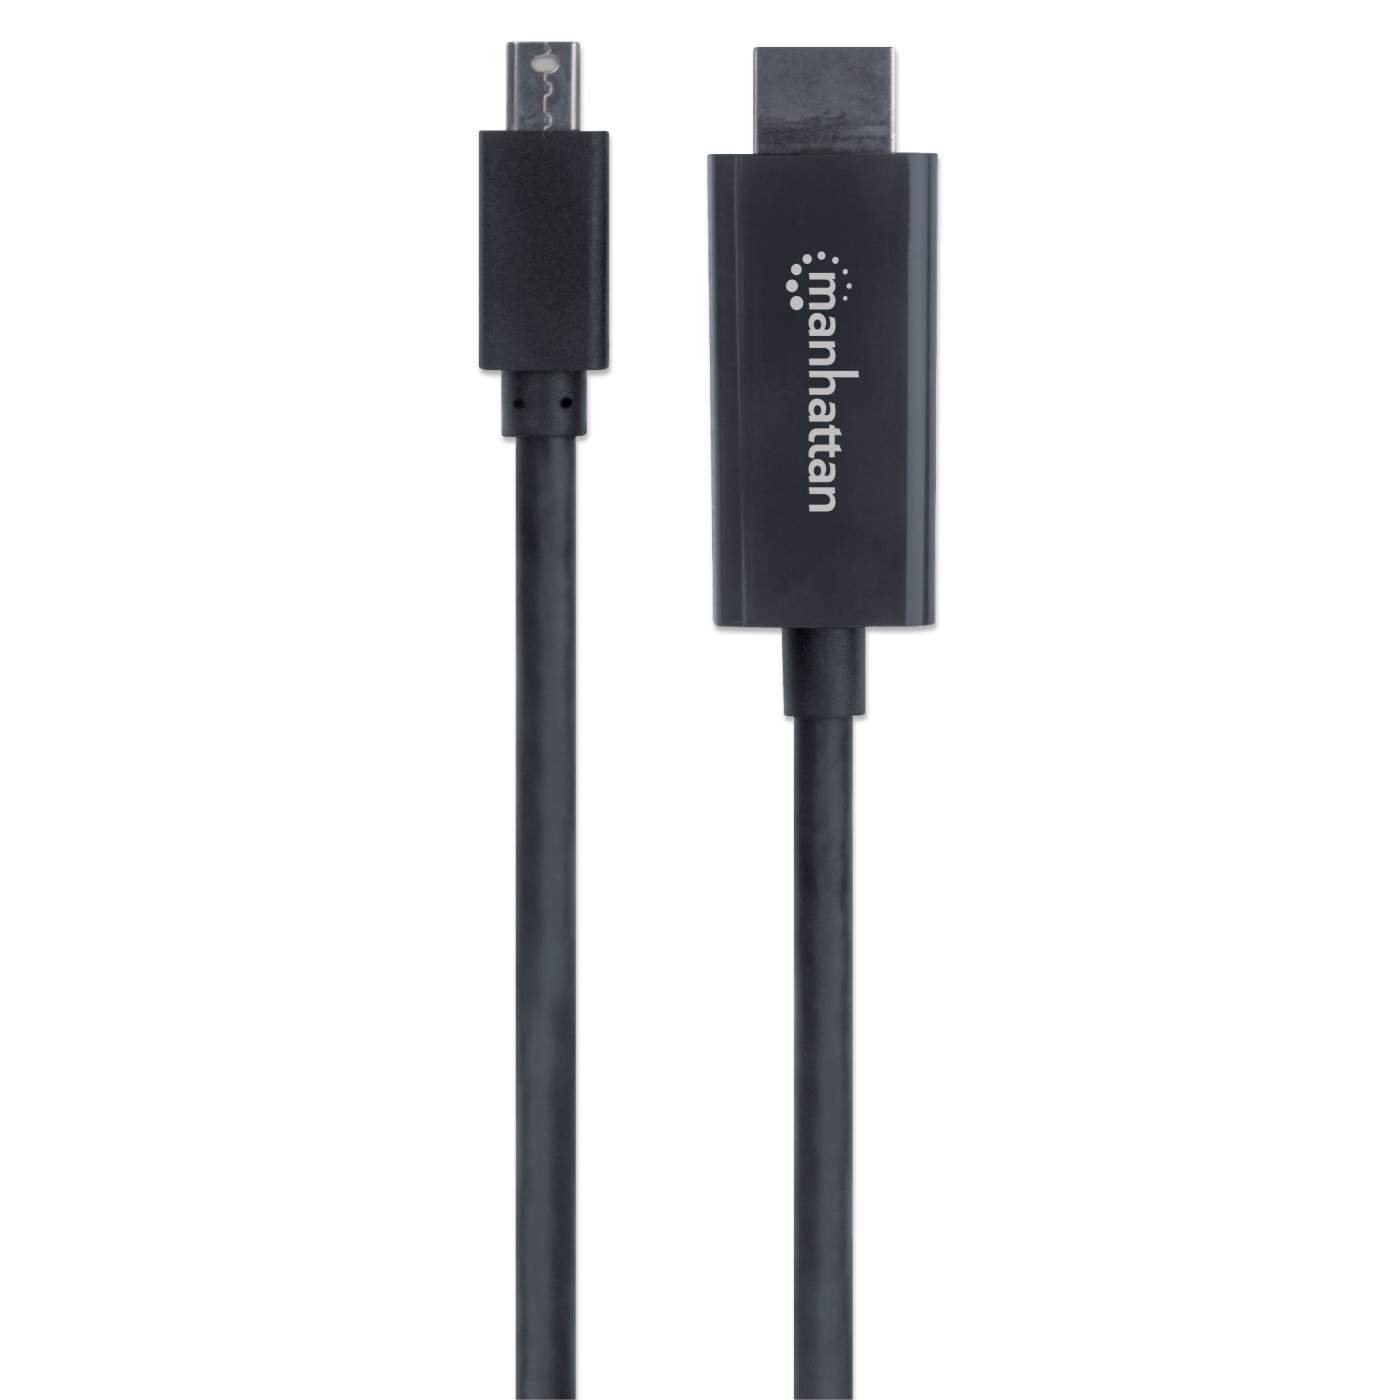 4K@60Hz Mini DisplayPort to HDMI Cable Image 5